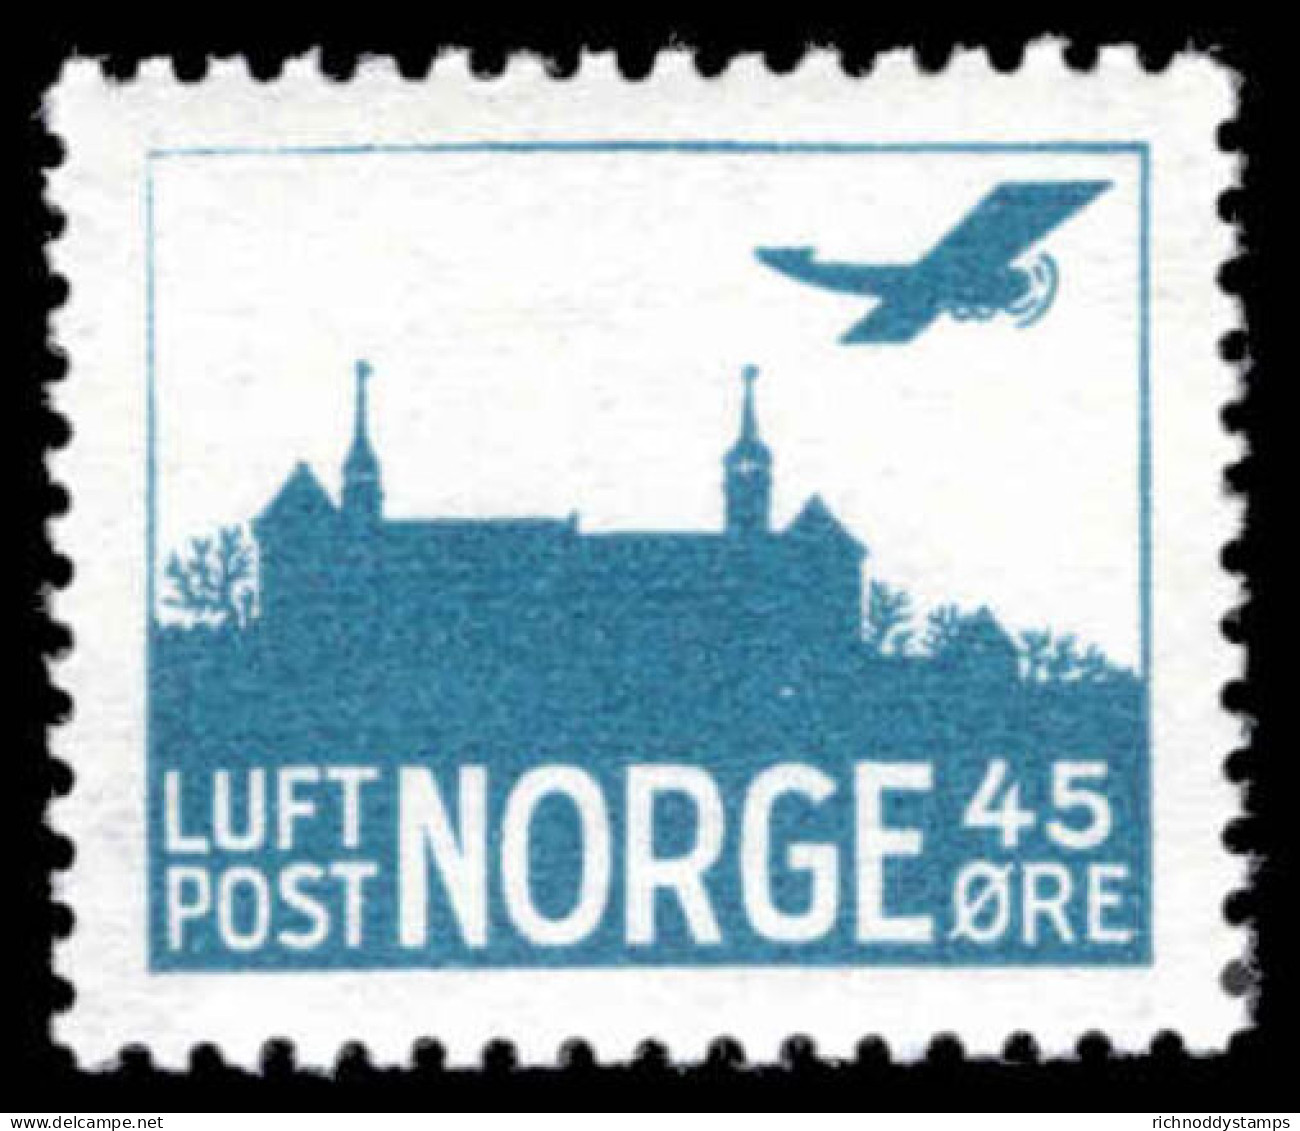 Norway 1927 Air First Printing Unmounted Mint. - Unused Stamps